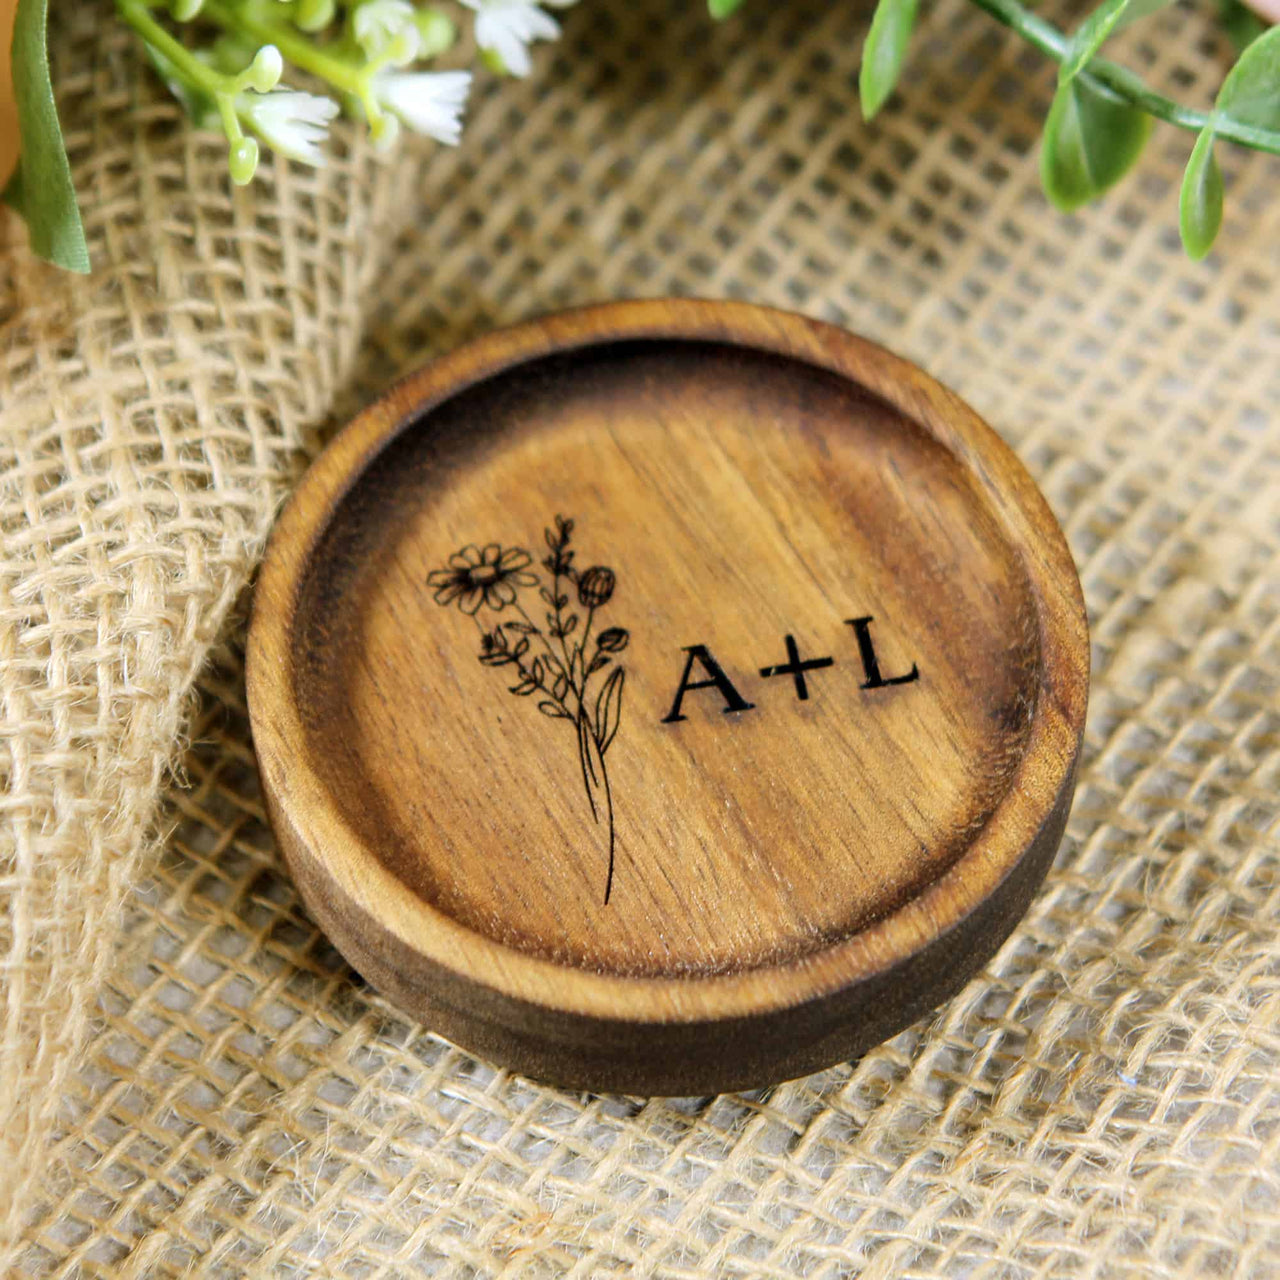 birth flower engraved on wood ring dish 